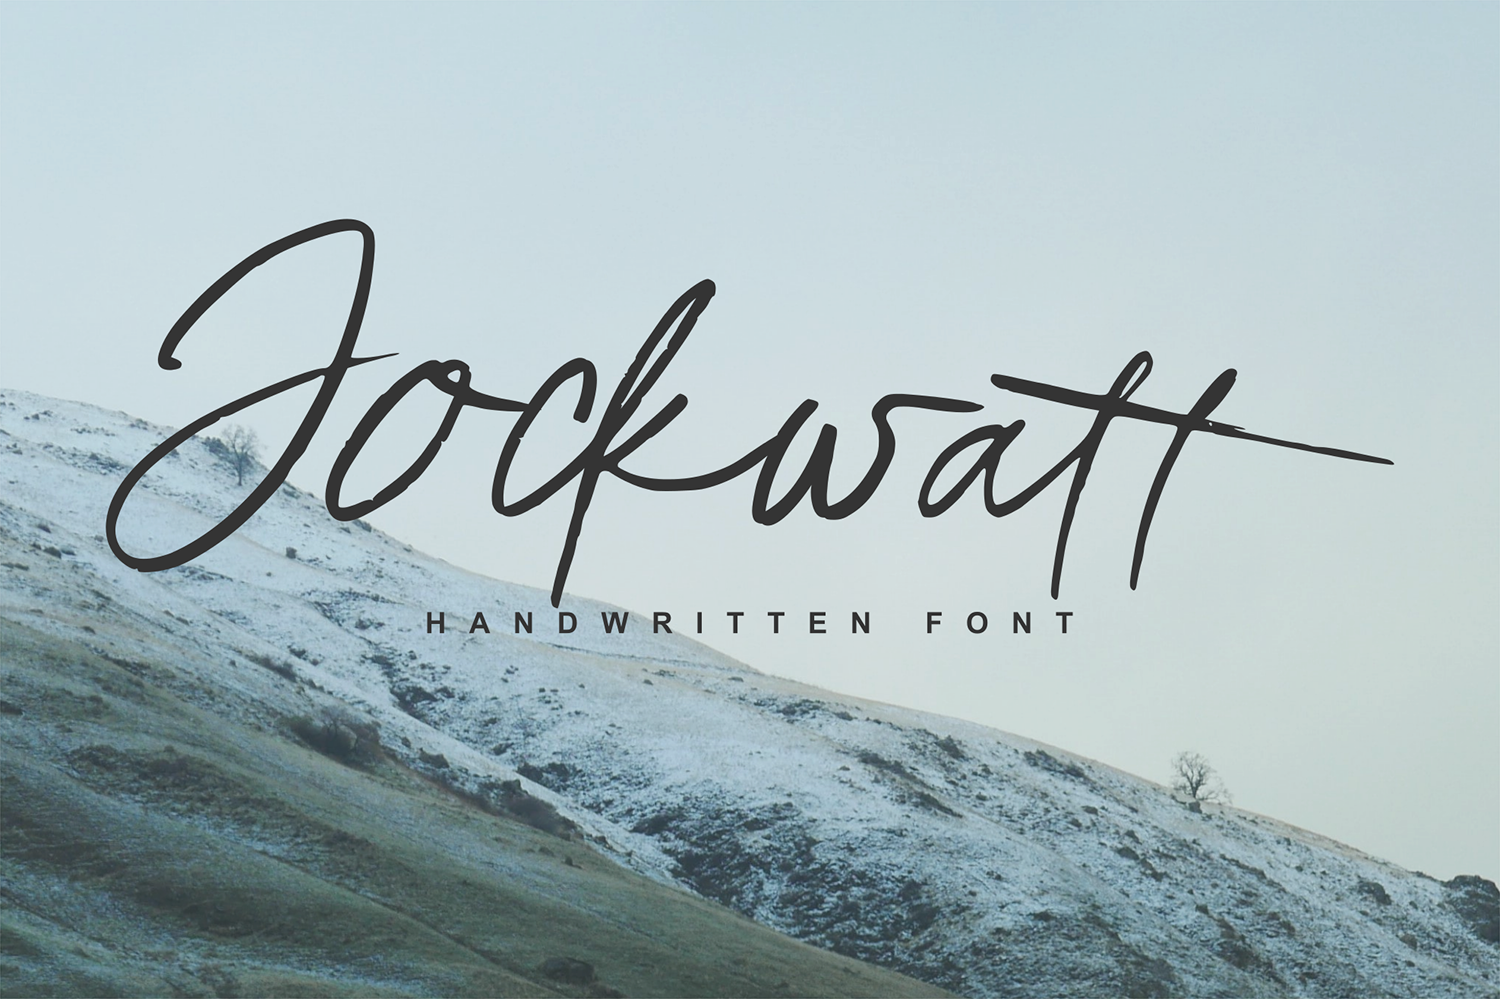 Jockwatt Free Font